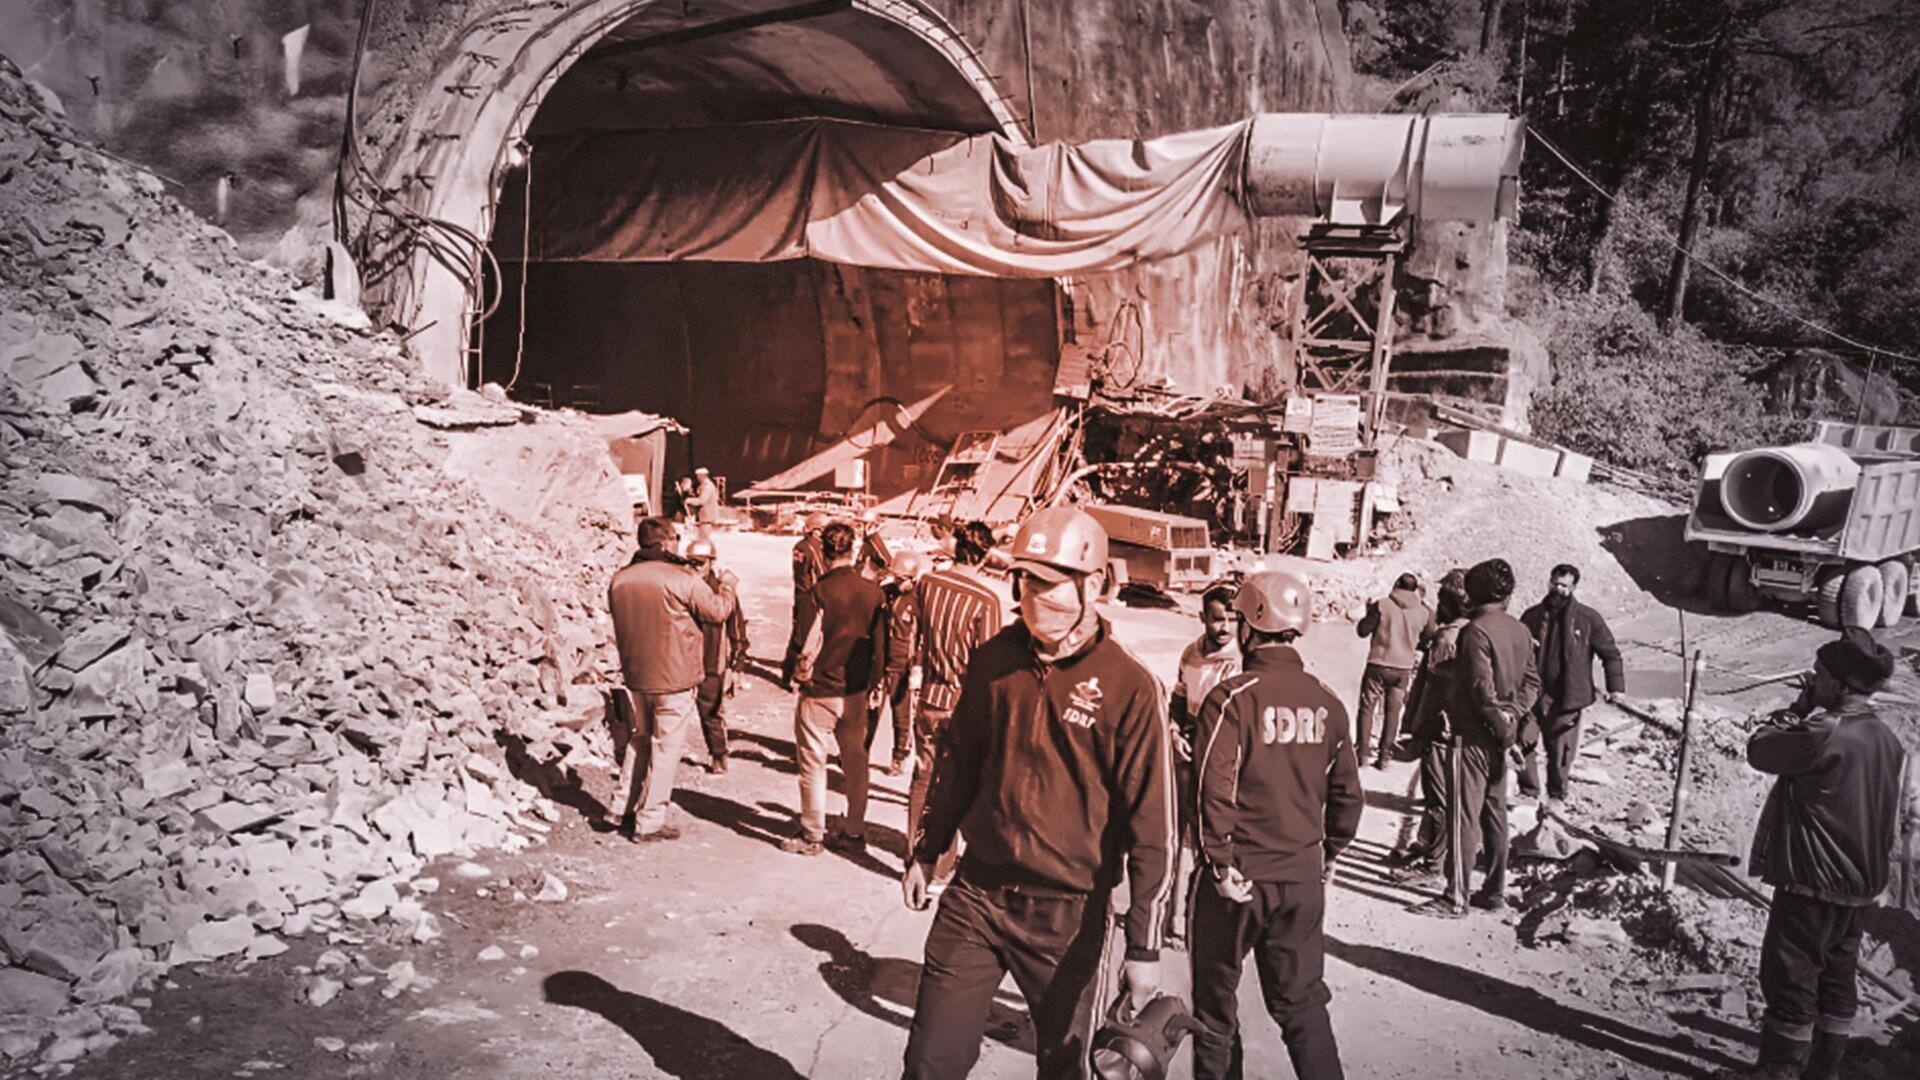 Uttarkashi tunnel rescue: After 100+ hours new machine raises hopes